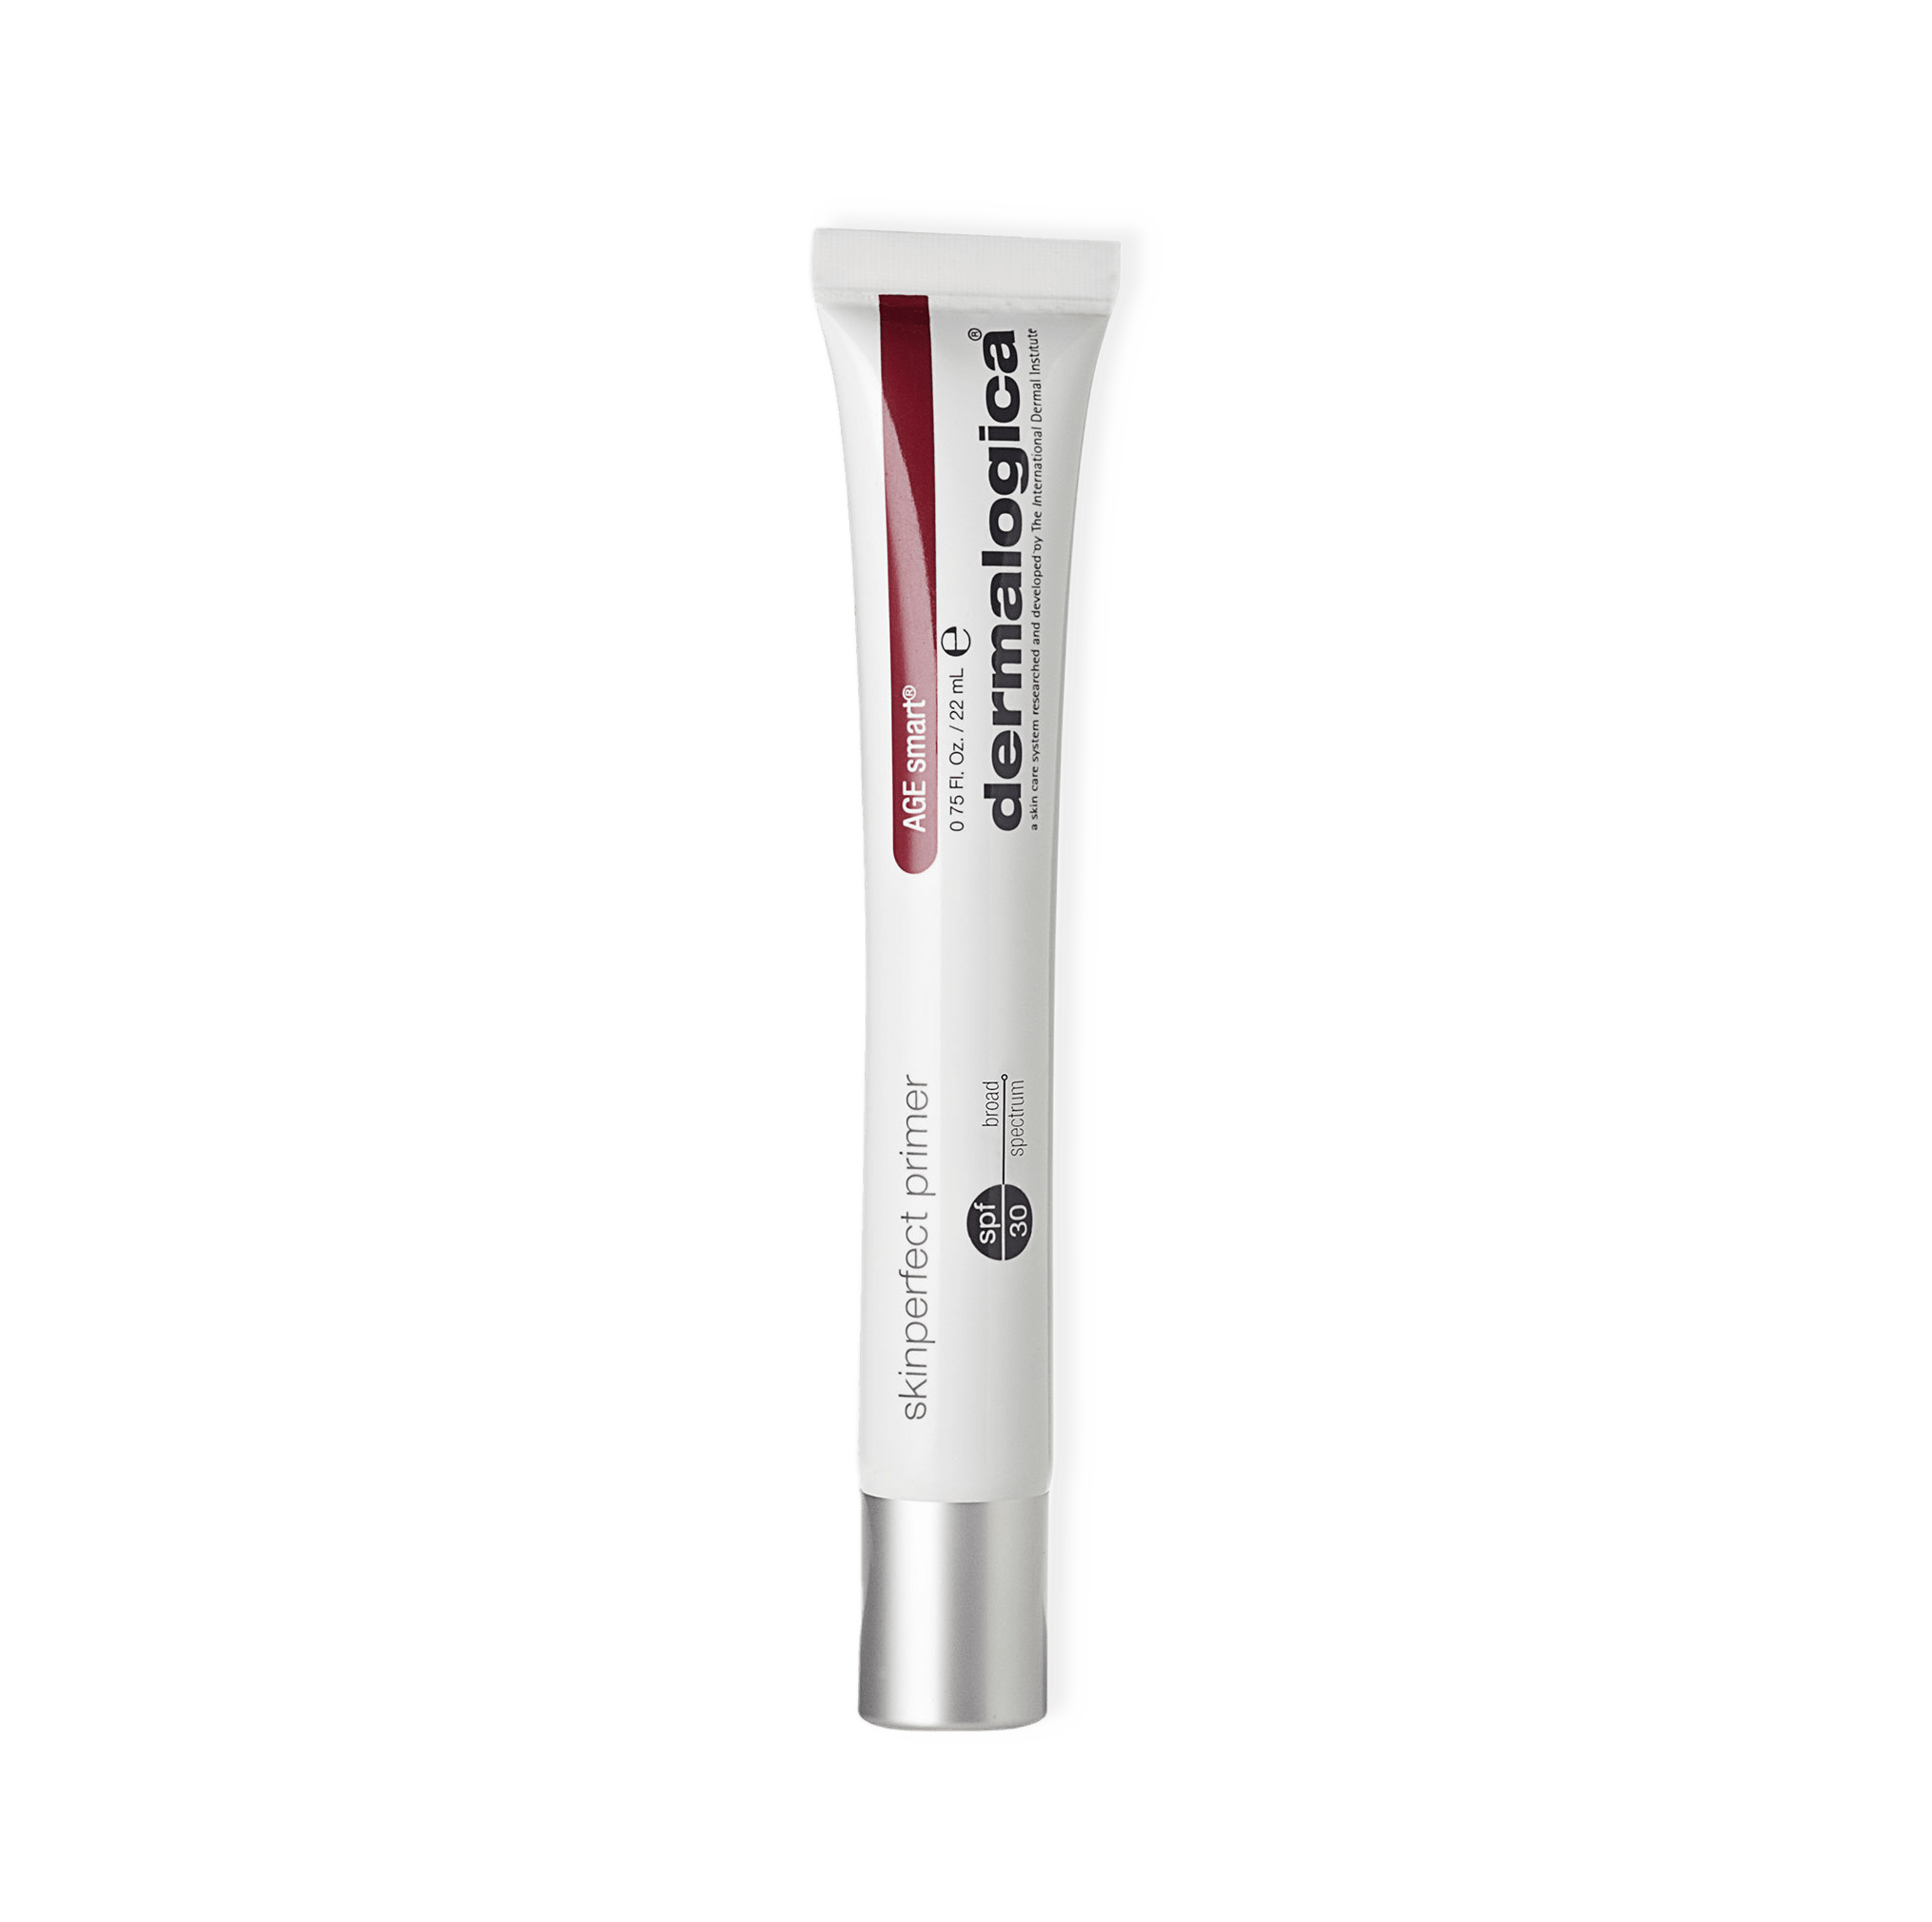 Skin Perfect Primer SPF 30 från Dermalogica